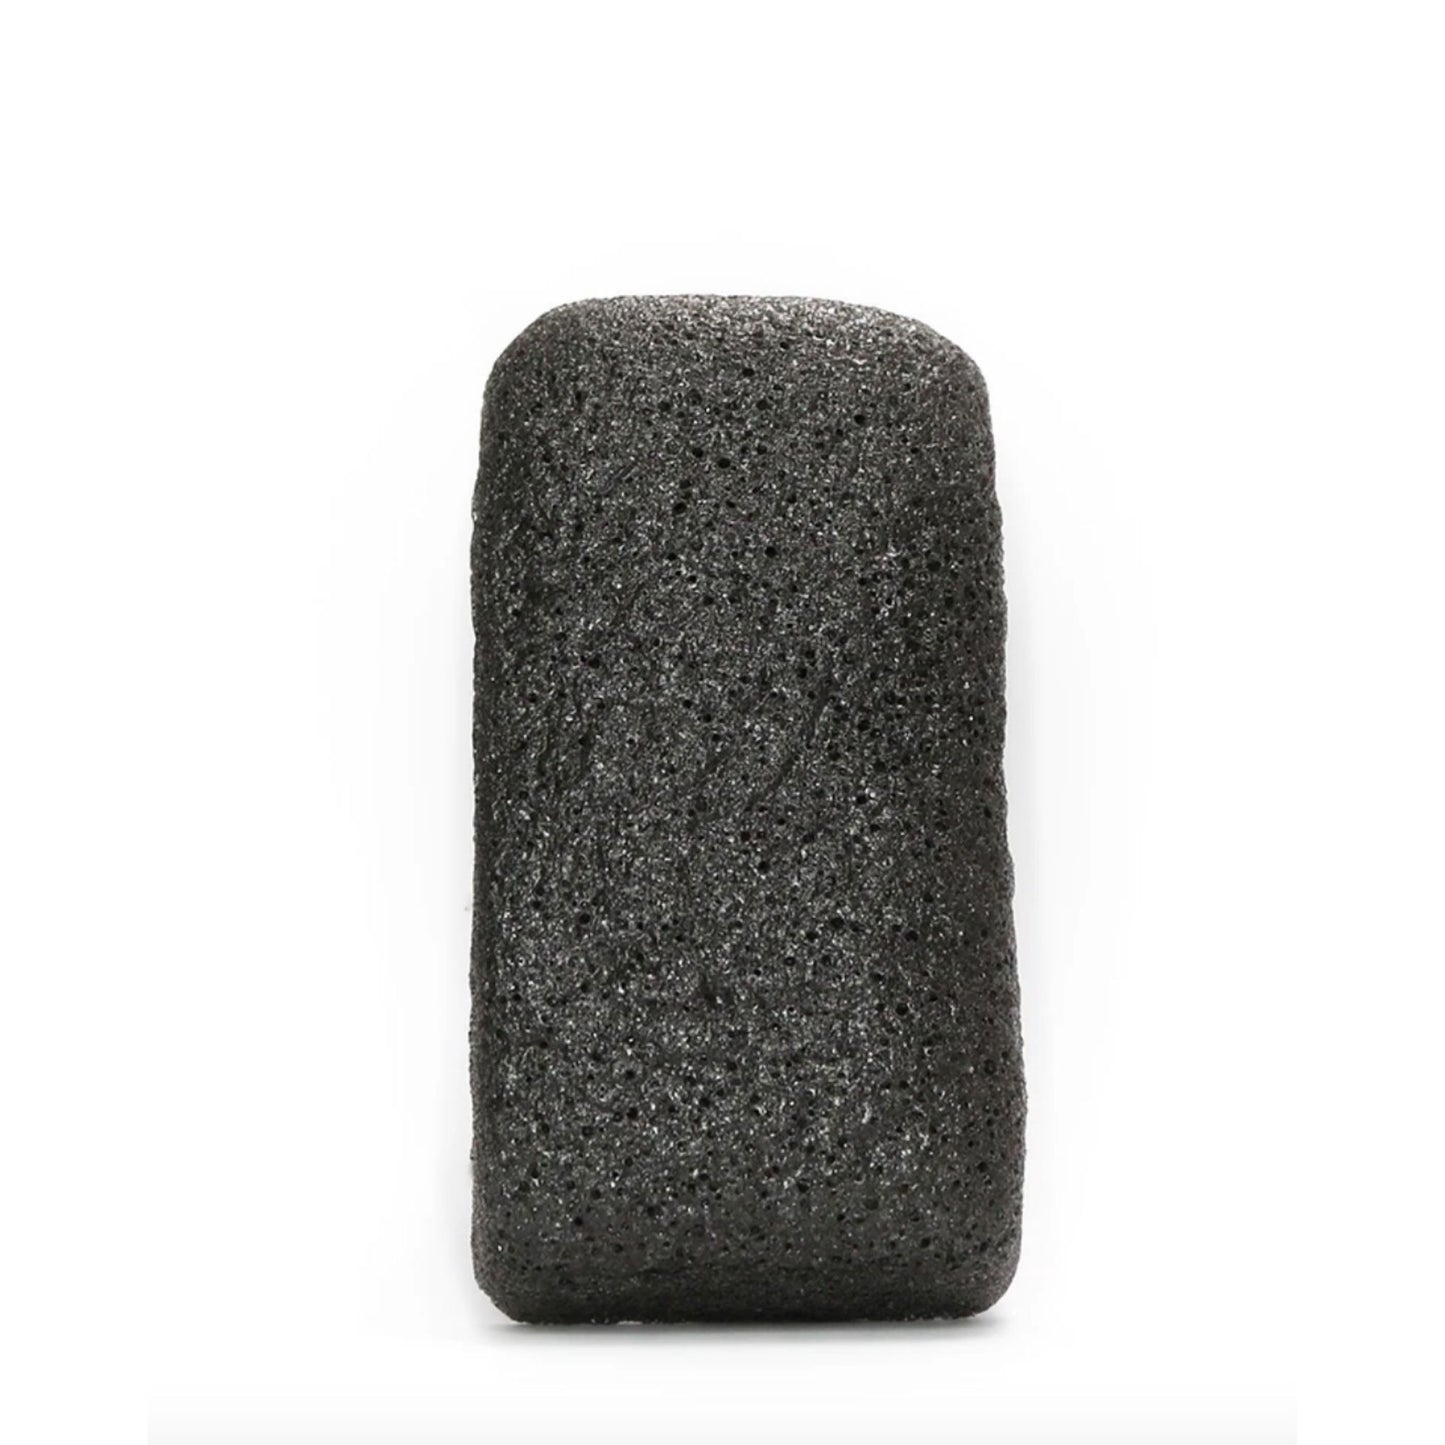 Charcoal Konjac Body Sponge - Banish